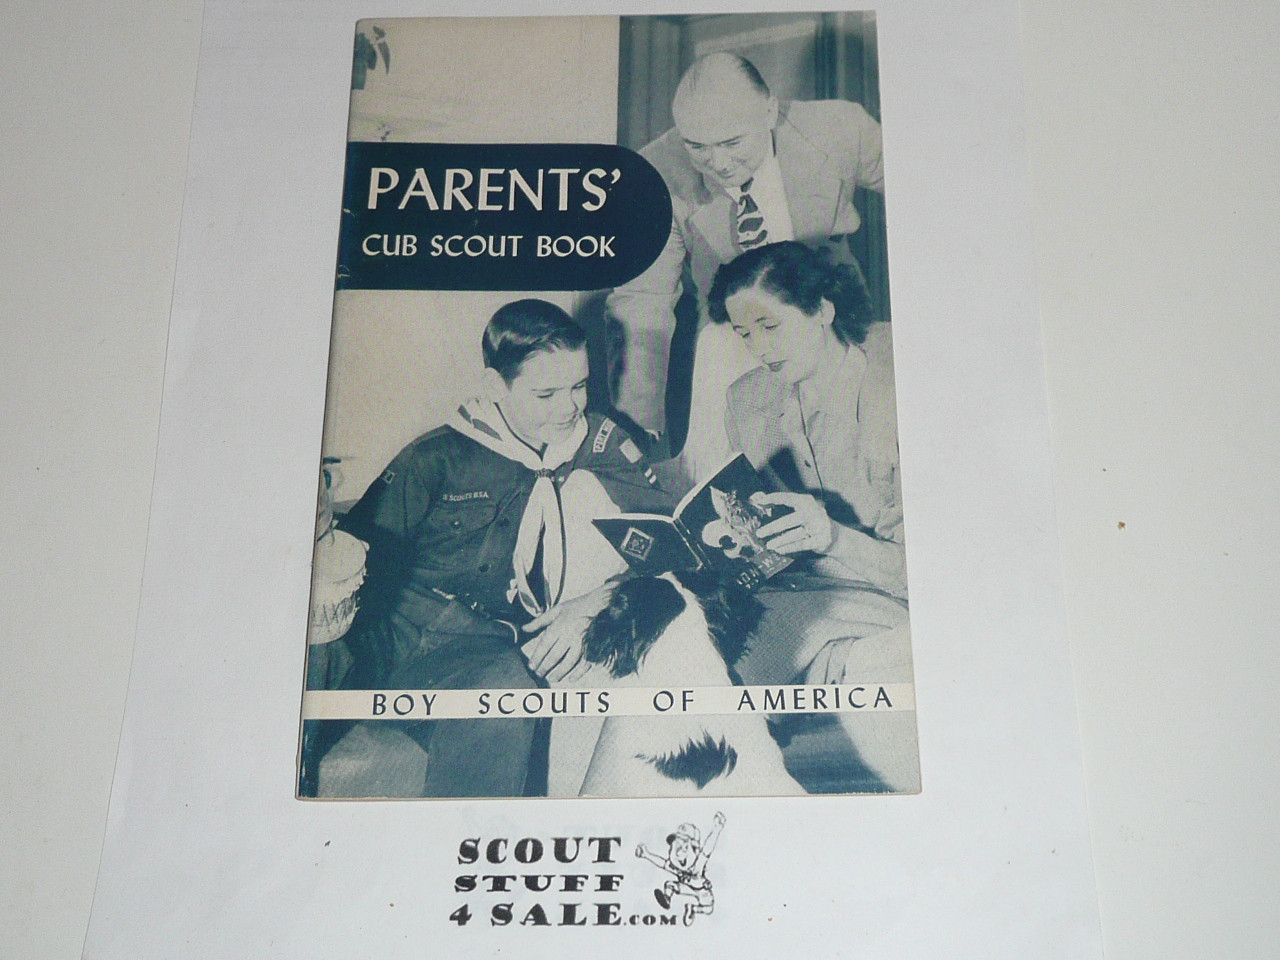 1951 Parent's Cub Scout Book, 10-51 Printing